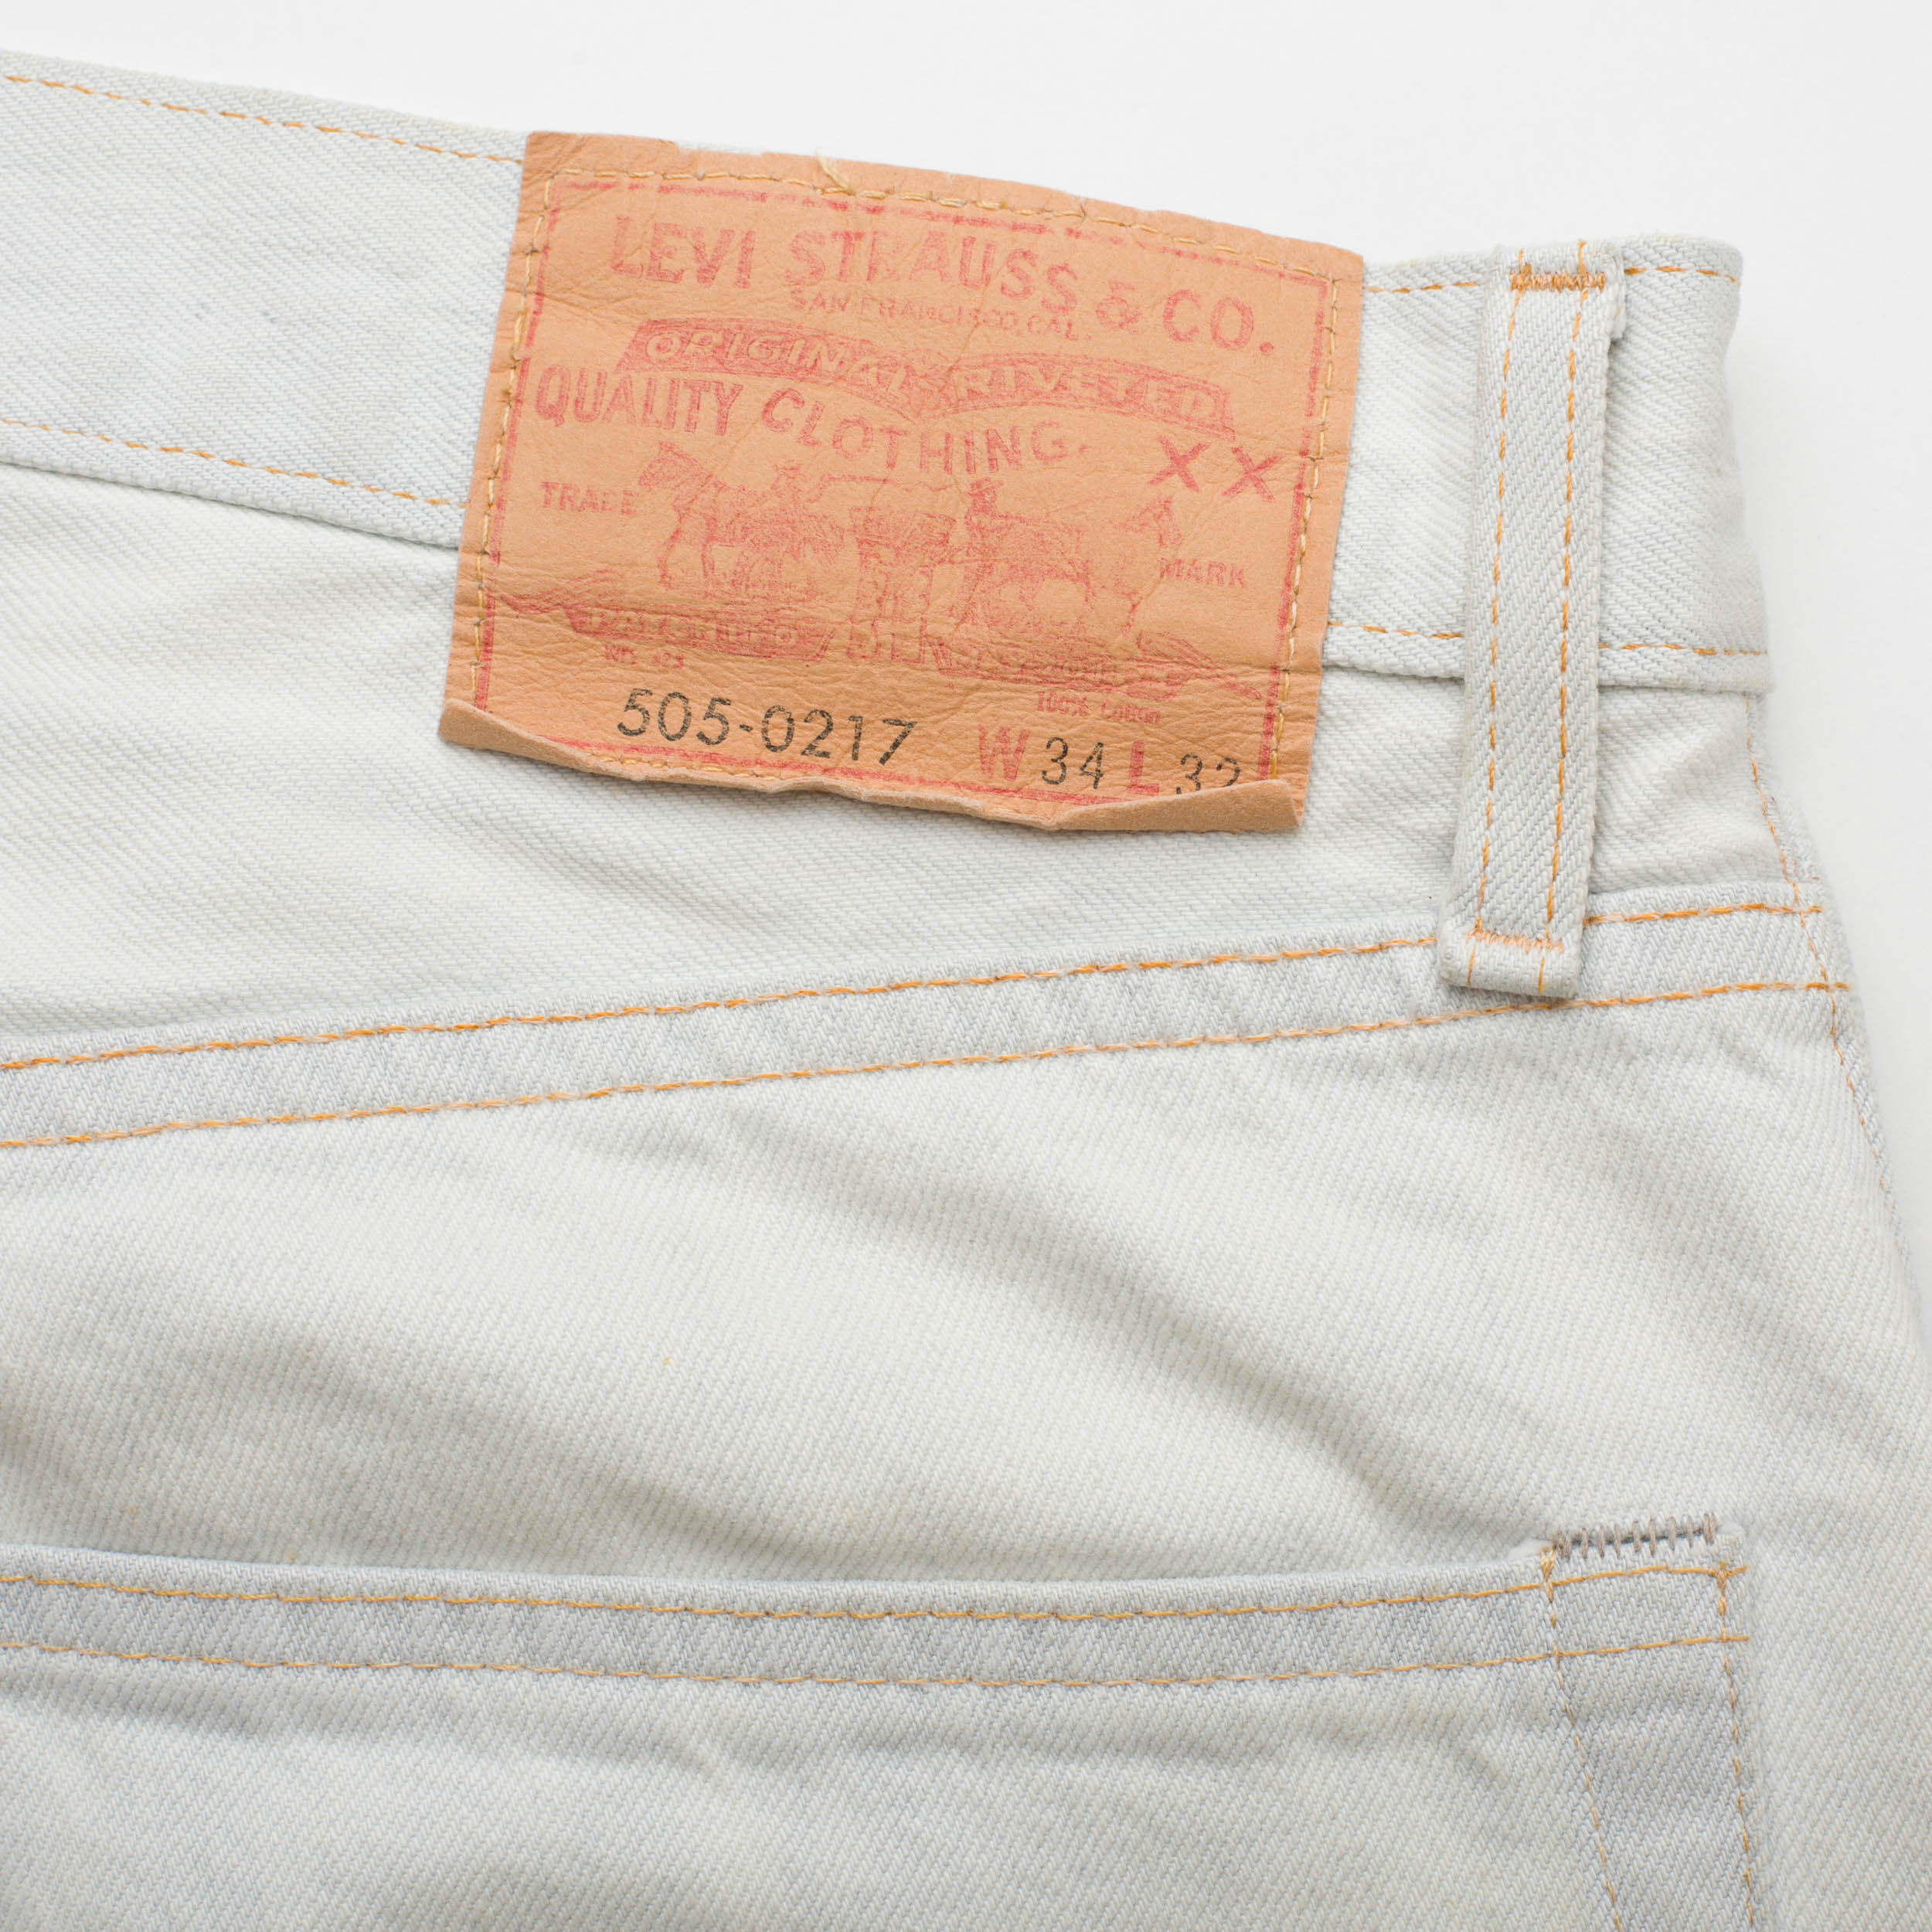 LEVI'S Vintage Clothing 505-0217 Light Denim Selvedge Slim Jeans W34 L –  SARTORIALE